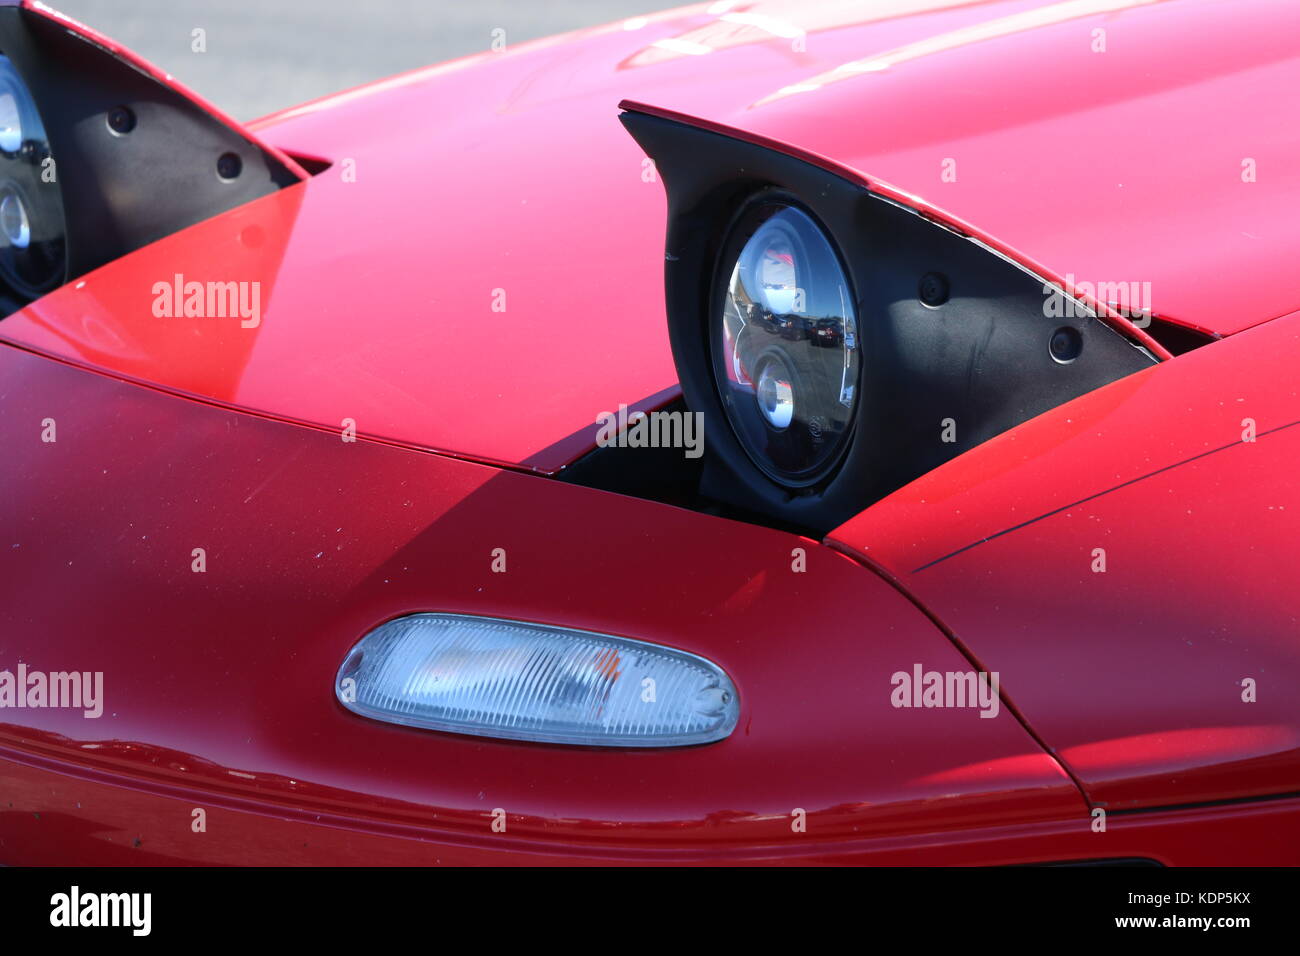 Pop up headlights on a red Mazda Miata. Stock Photo